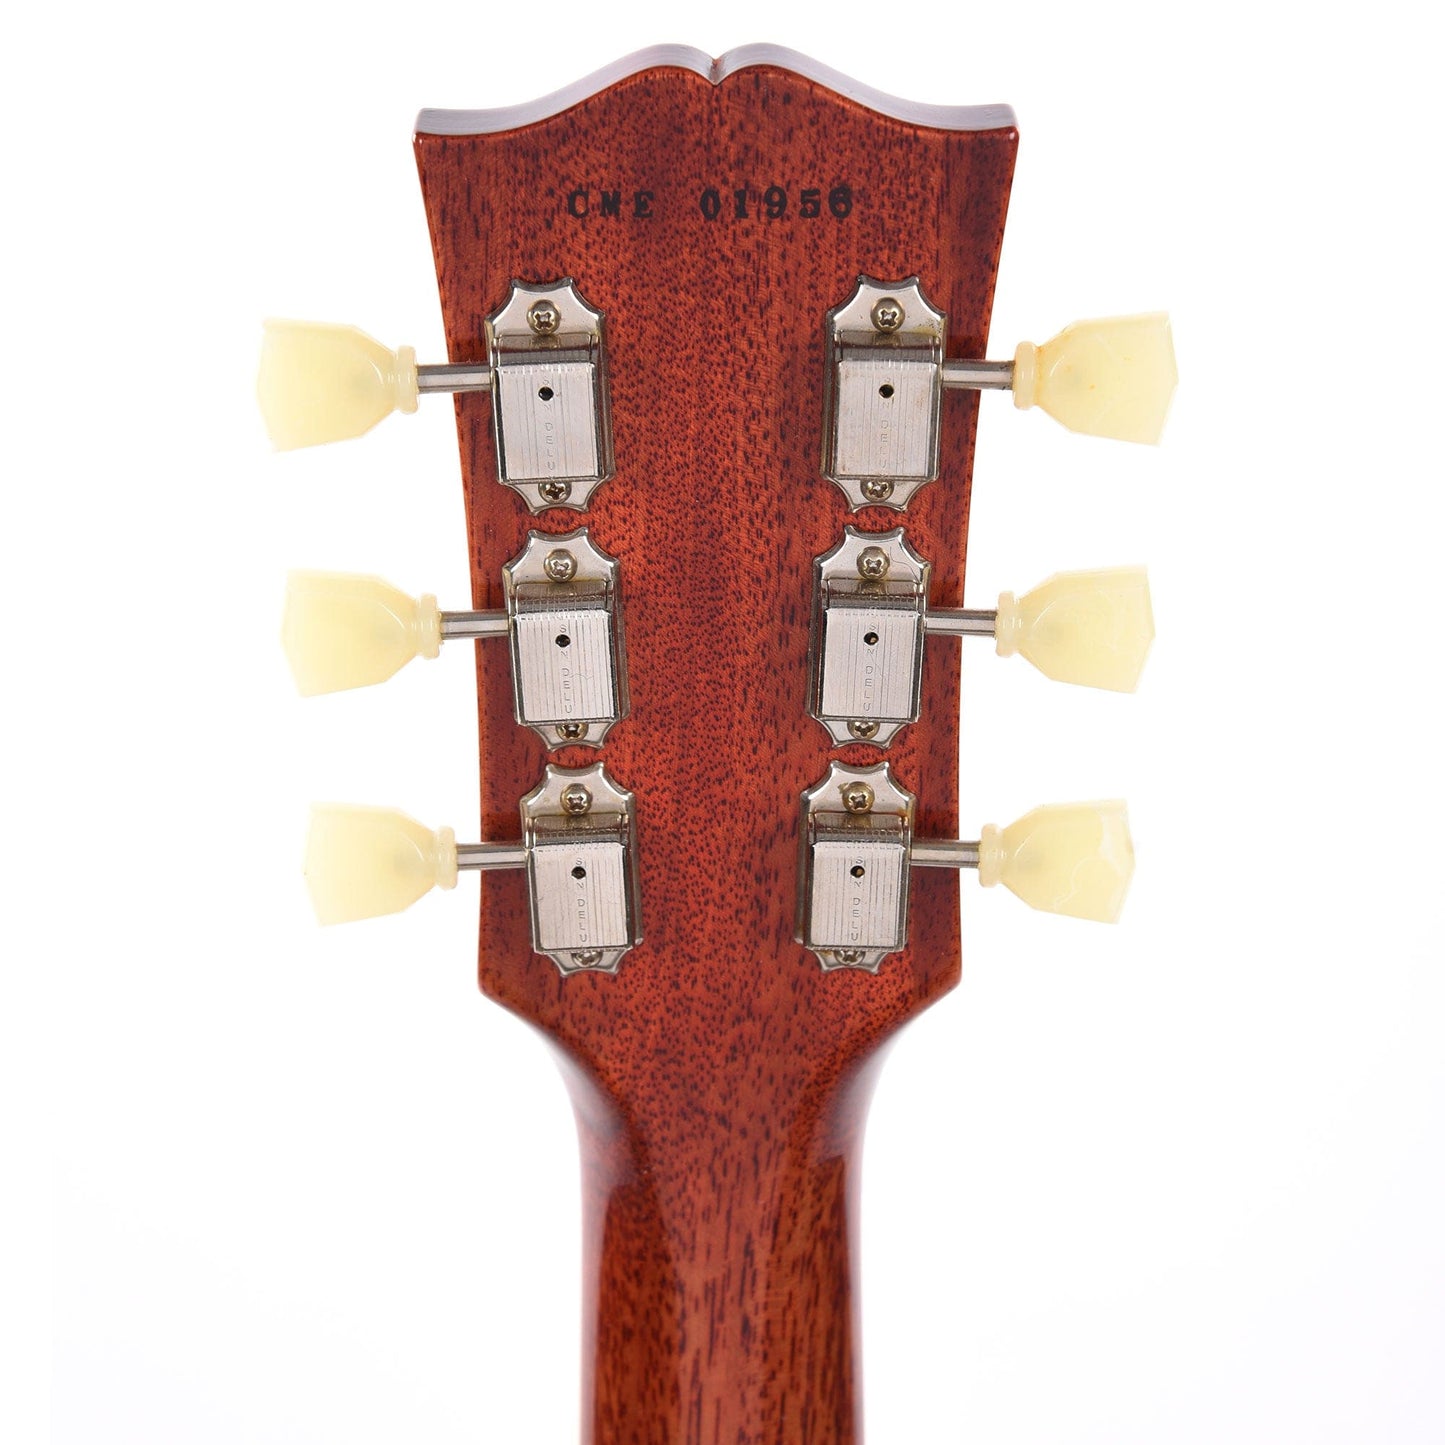 Gibson Custom Shop 1959 Les Paul Standard "CME Spec" Amber VOS w/59 Carmelita Neck Electric Guitars / Solid Body